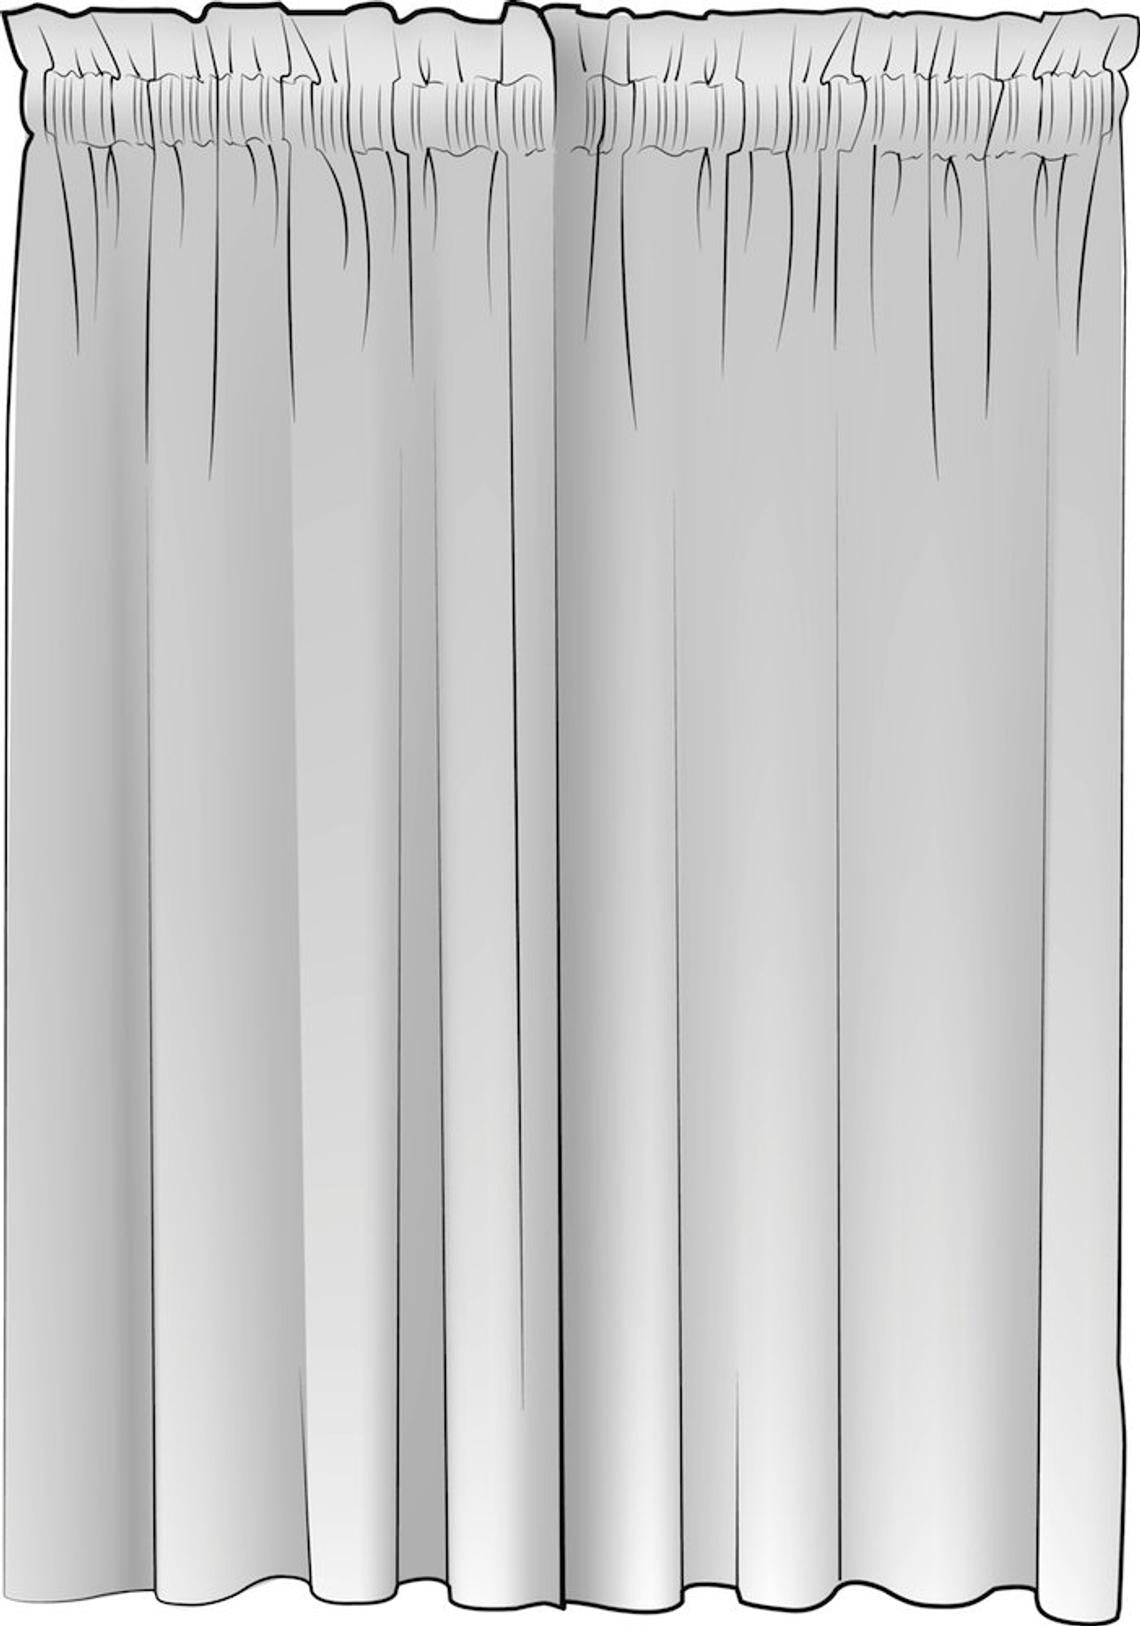 rod pocket curtain panels pair in tibi navy blue geometric paisley